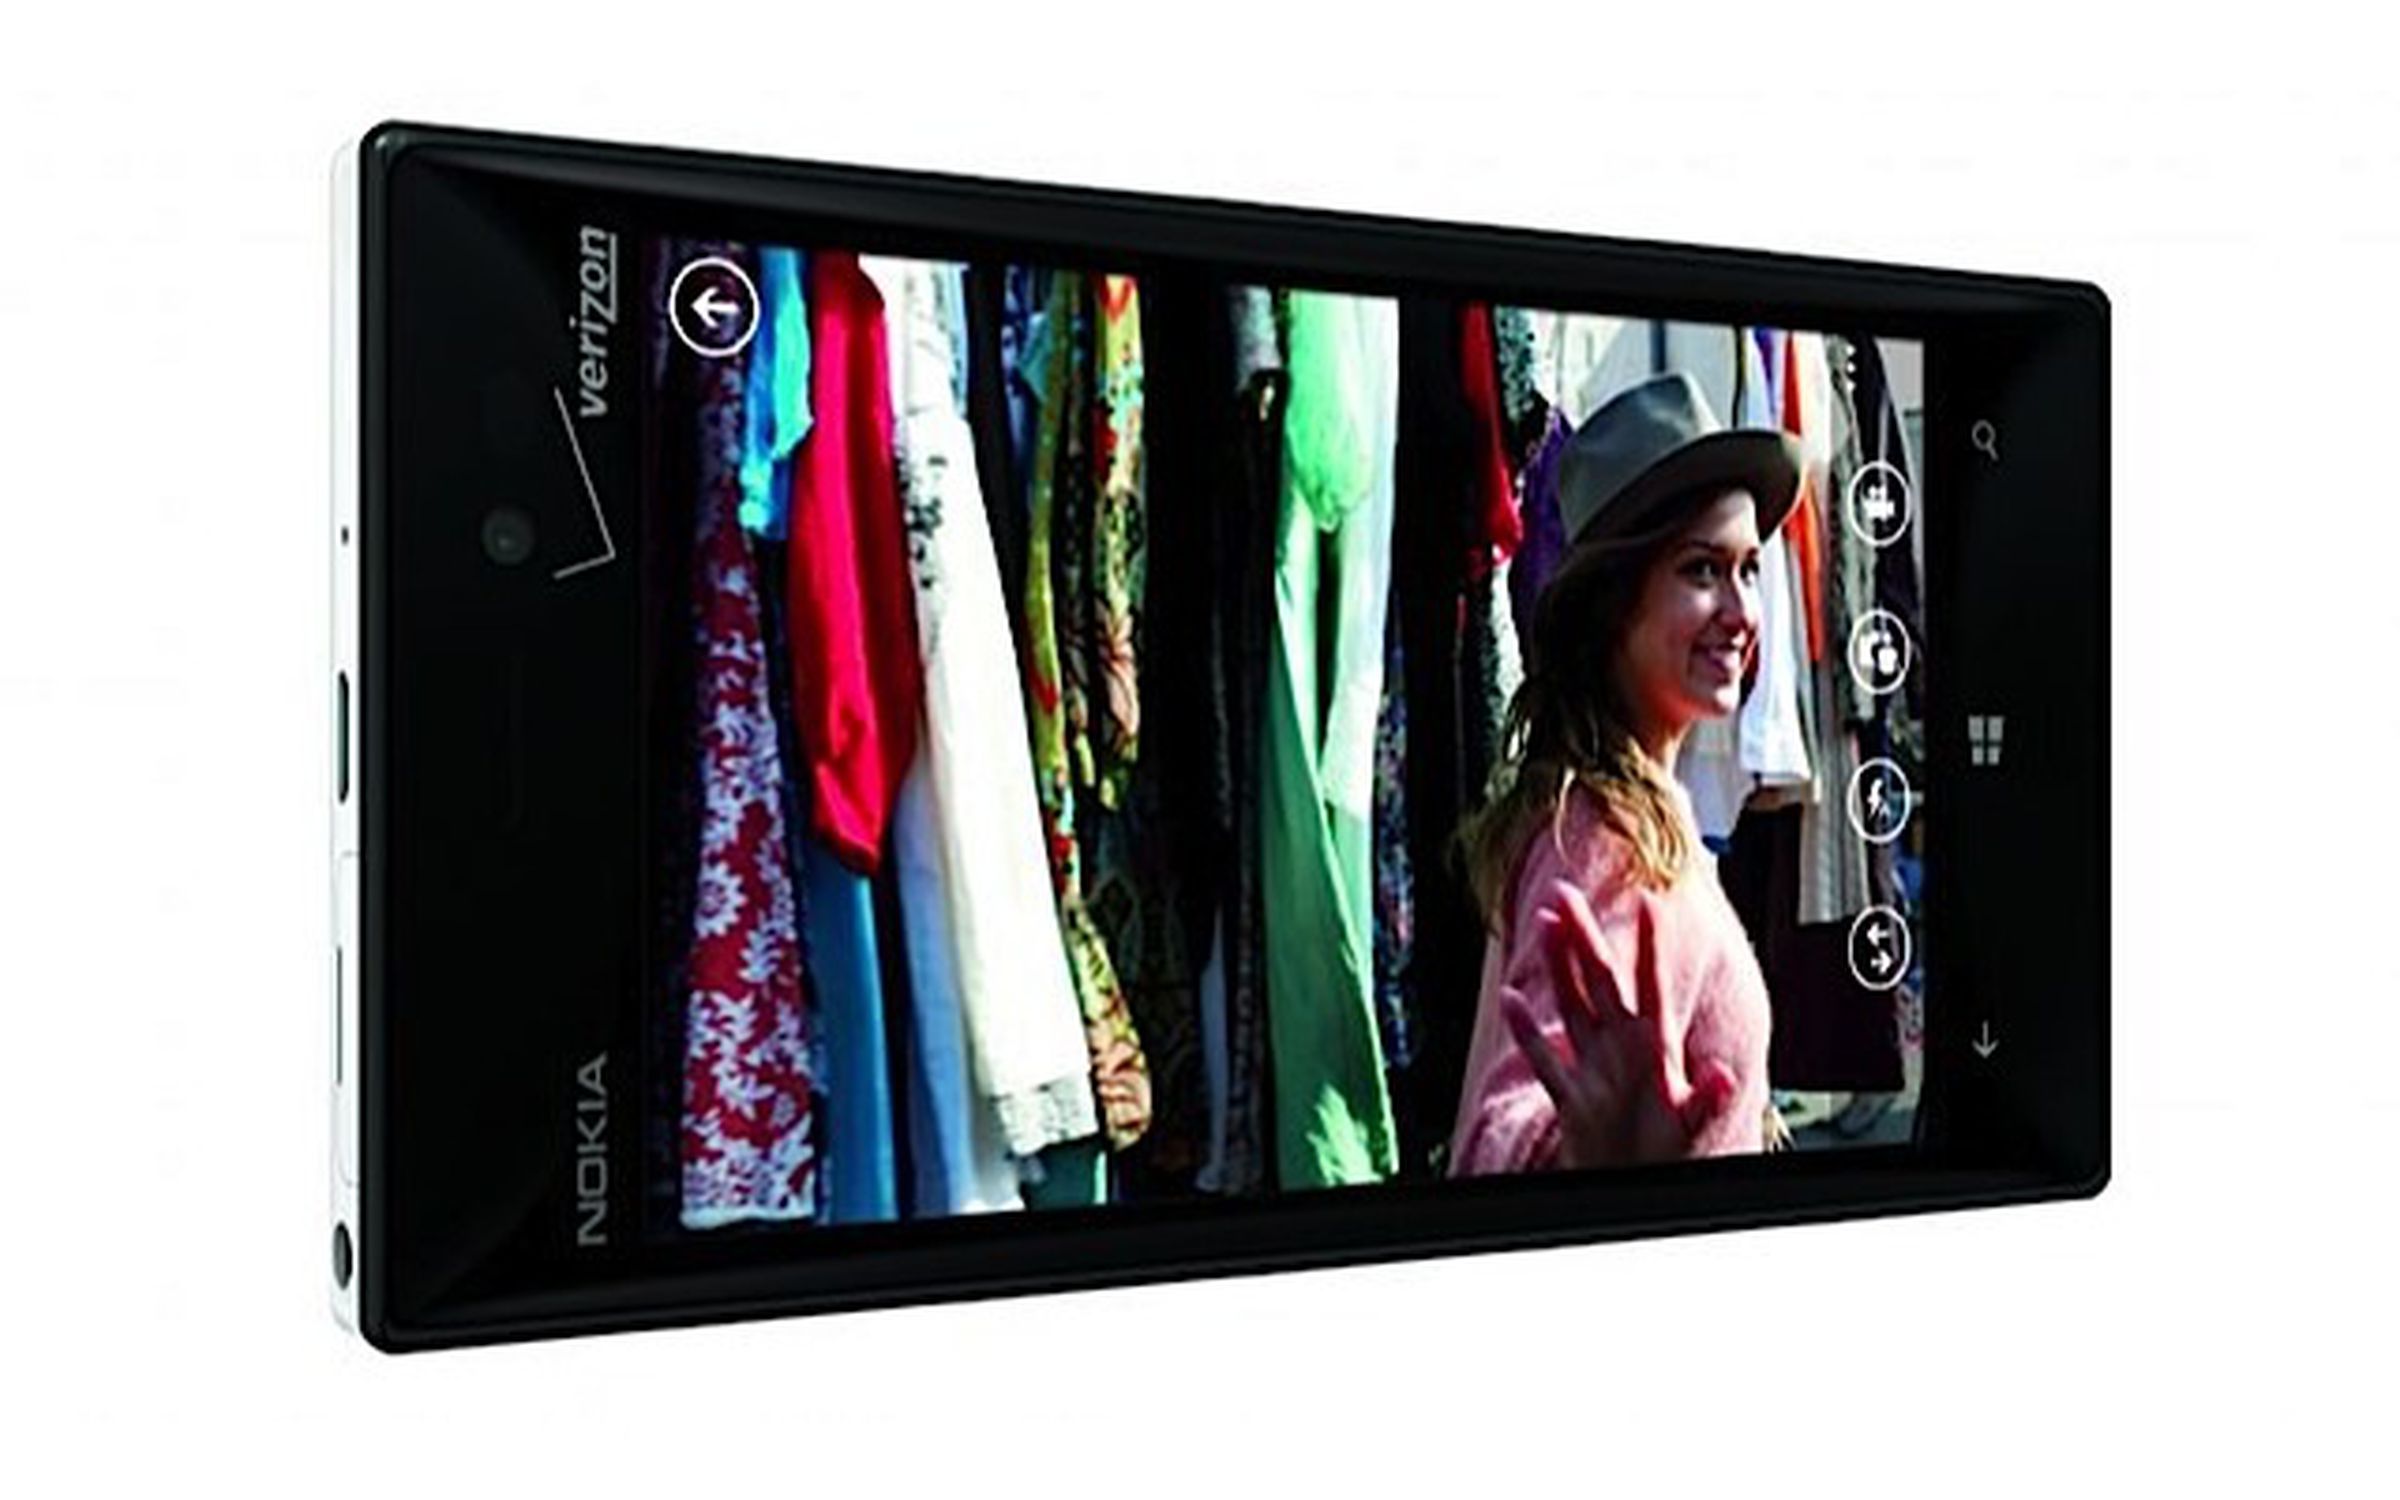 Nokia Lumia 928 images